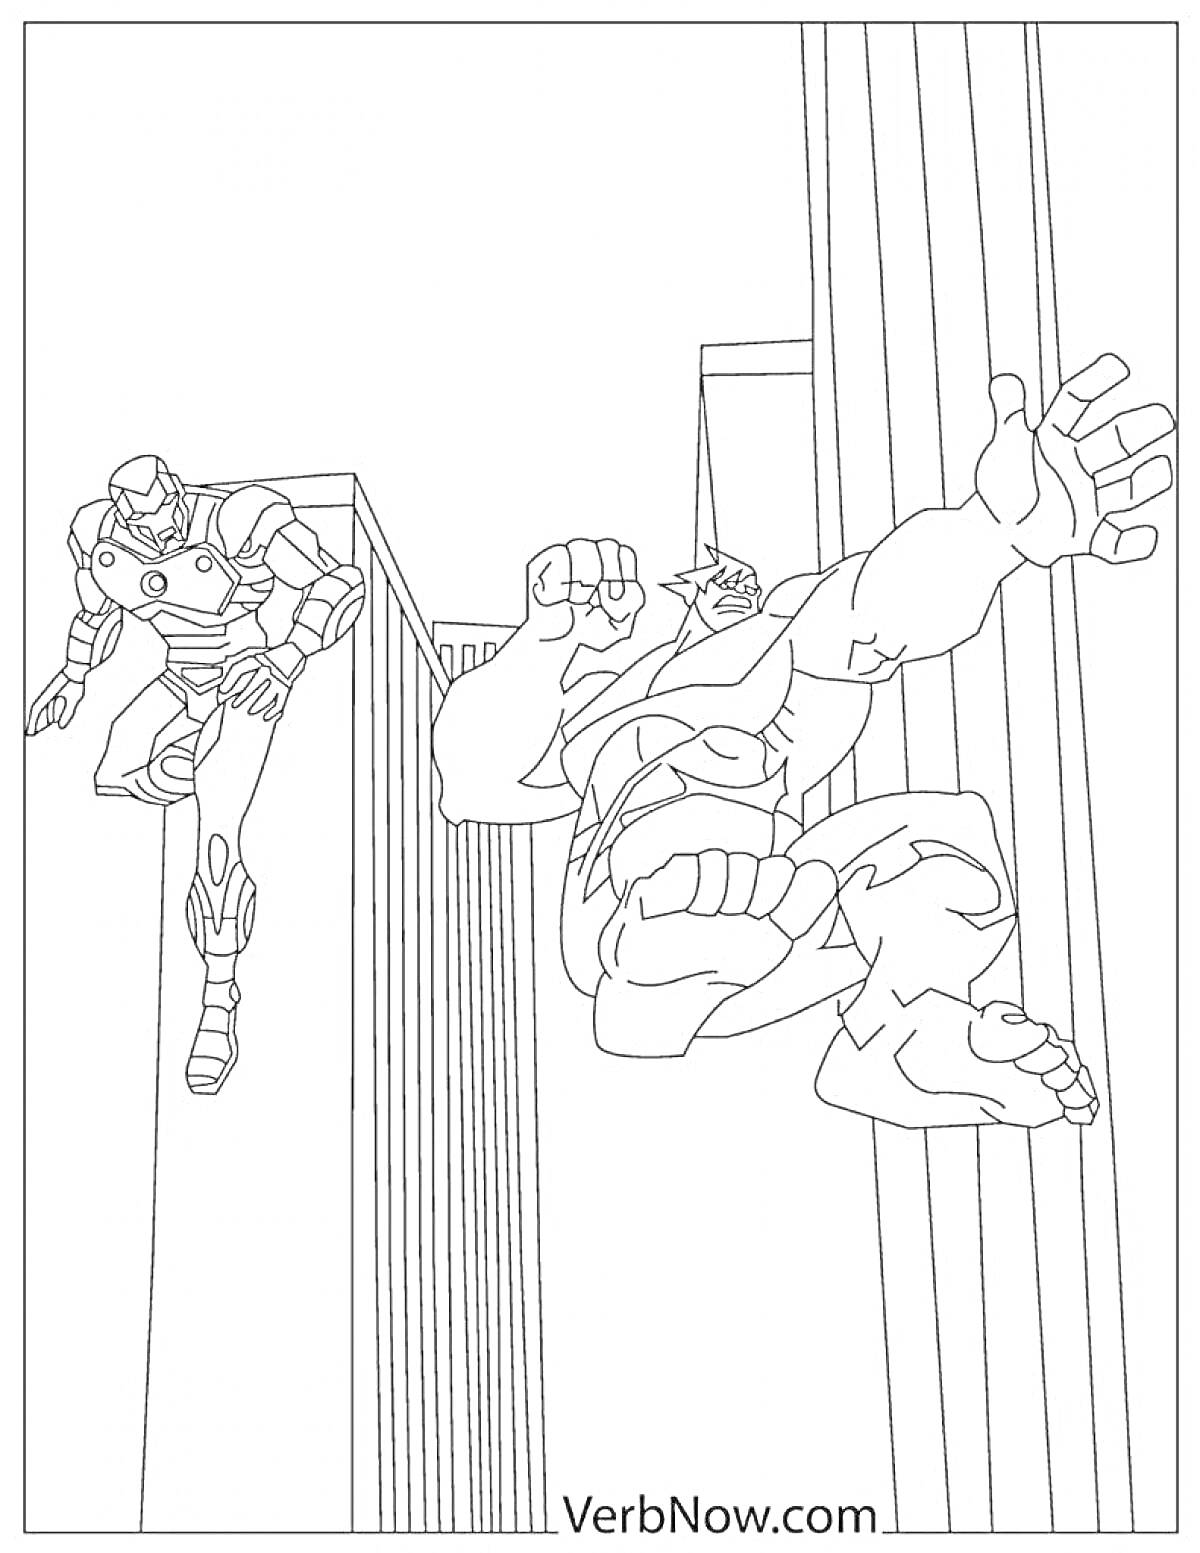 На раскраске изображено: Железный Человек, Халк, Небоскребы, Супергерои, Комиксы, Марвел